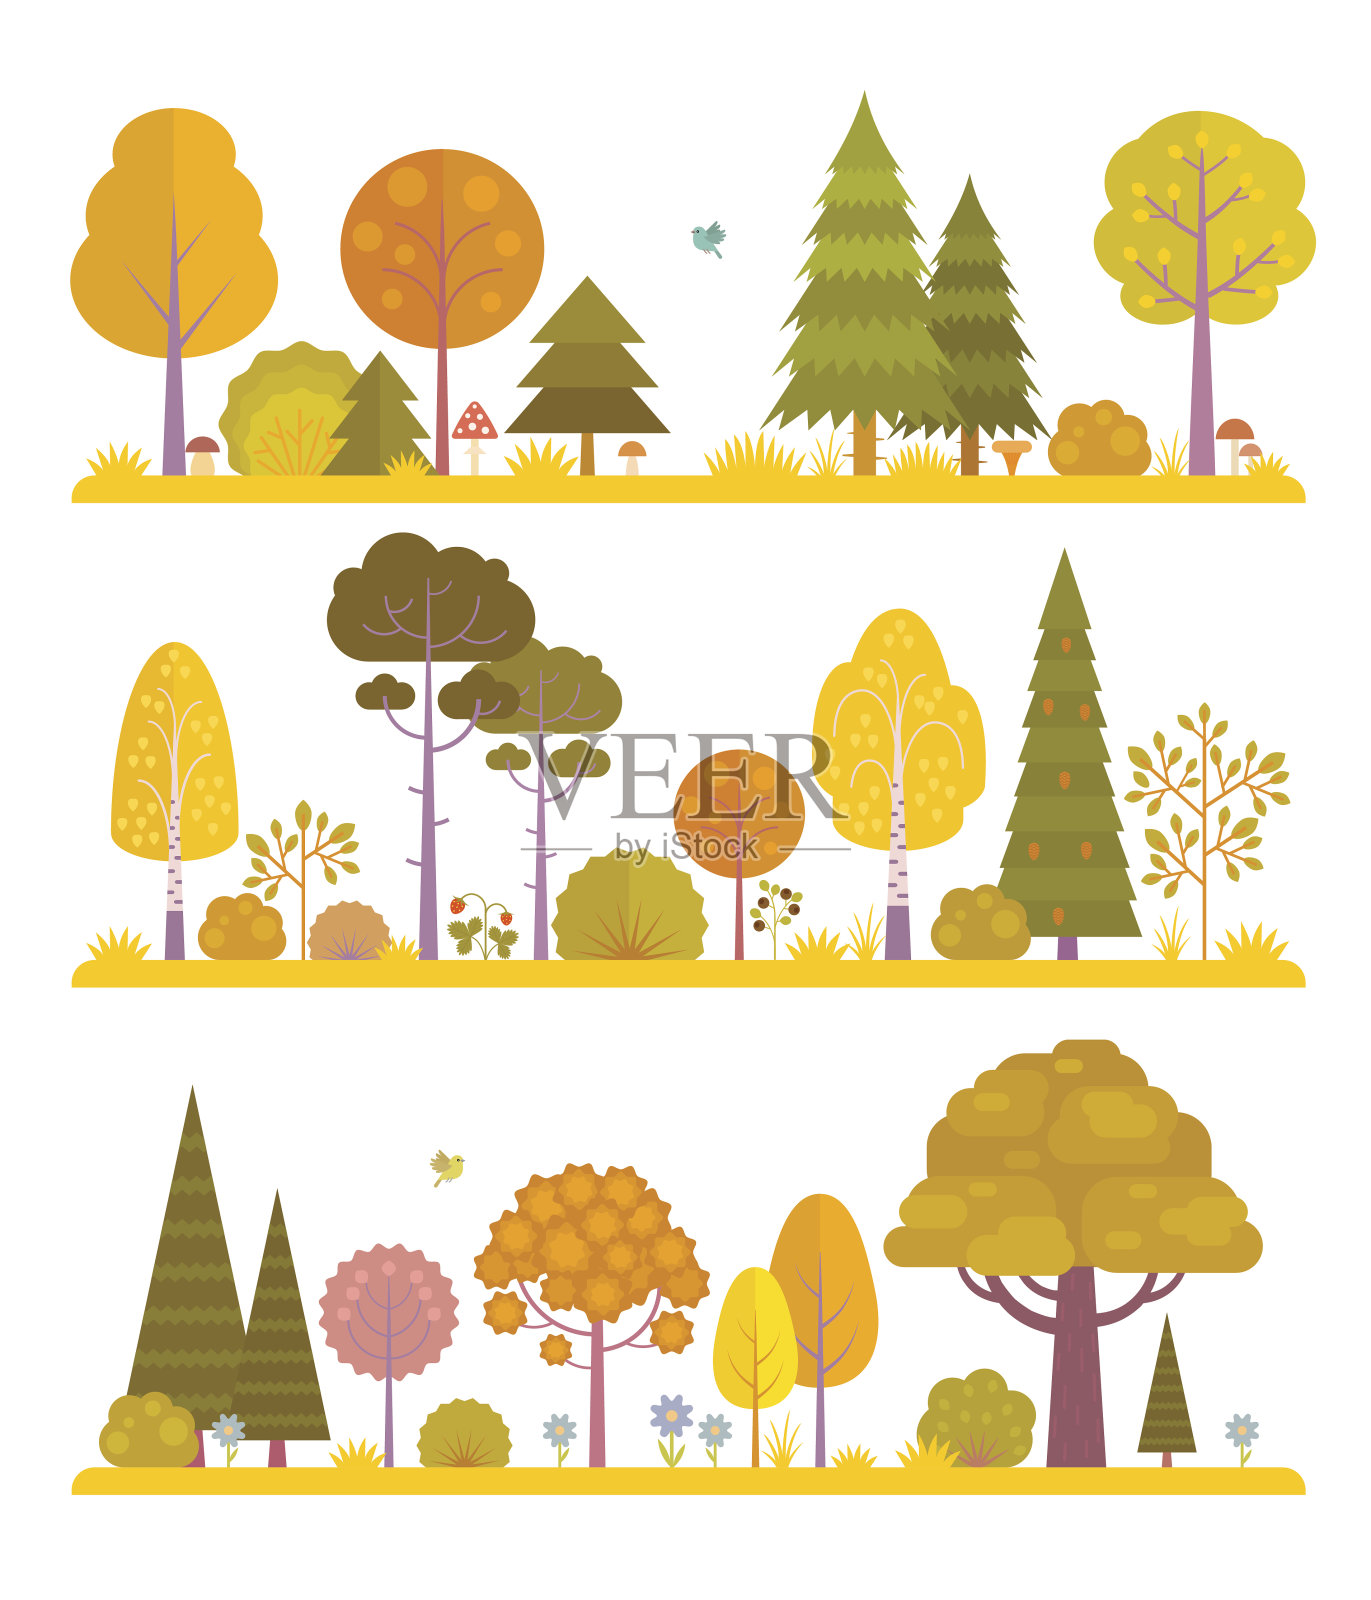 Aututmn森林设计元素图片